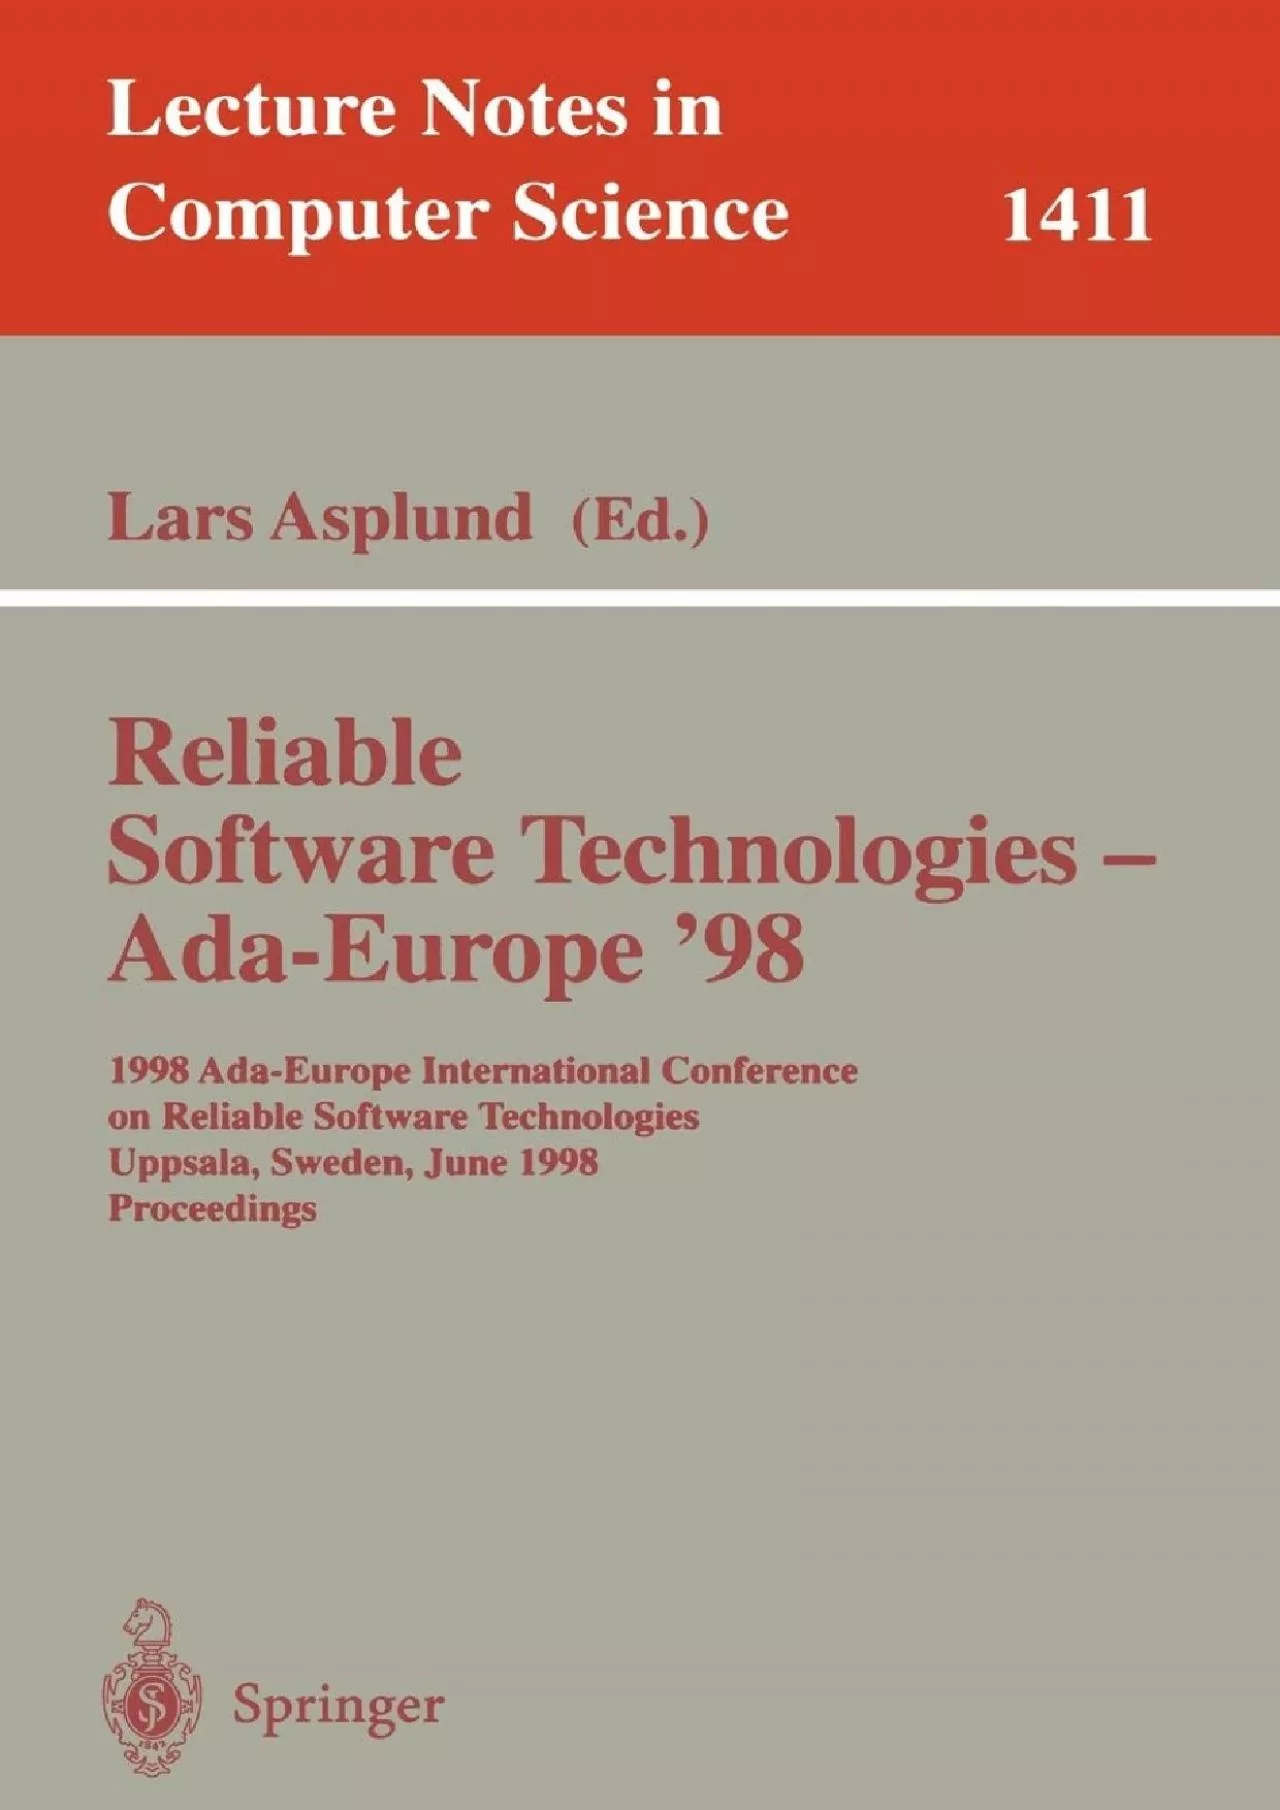 [READ]-Reliable Software Technologies - Ada-Europe \'98: 1998 Ada-Europe International